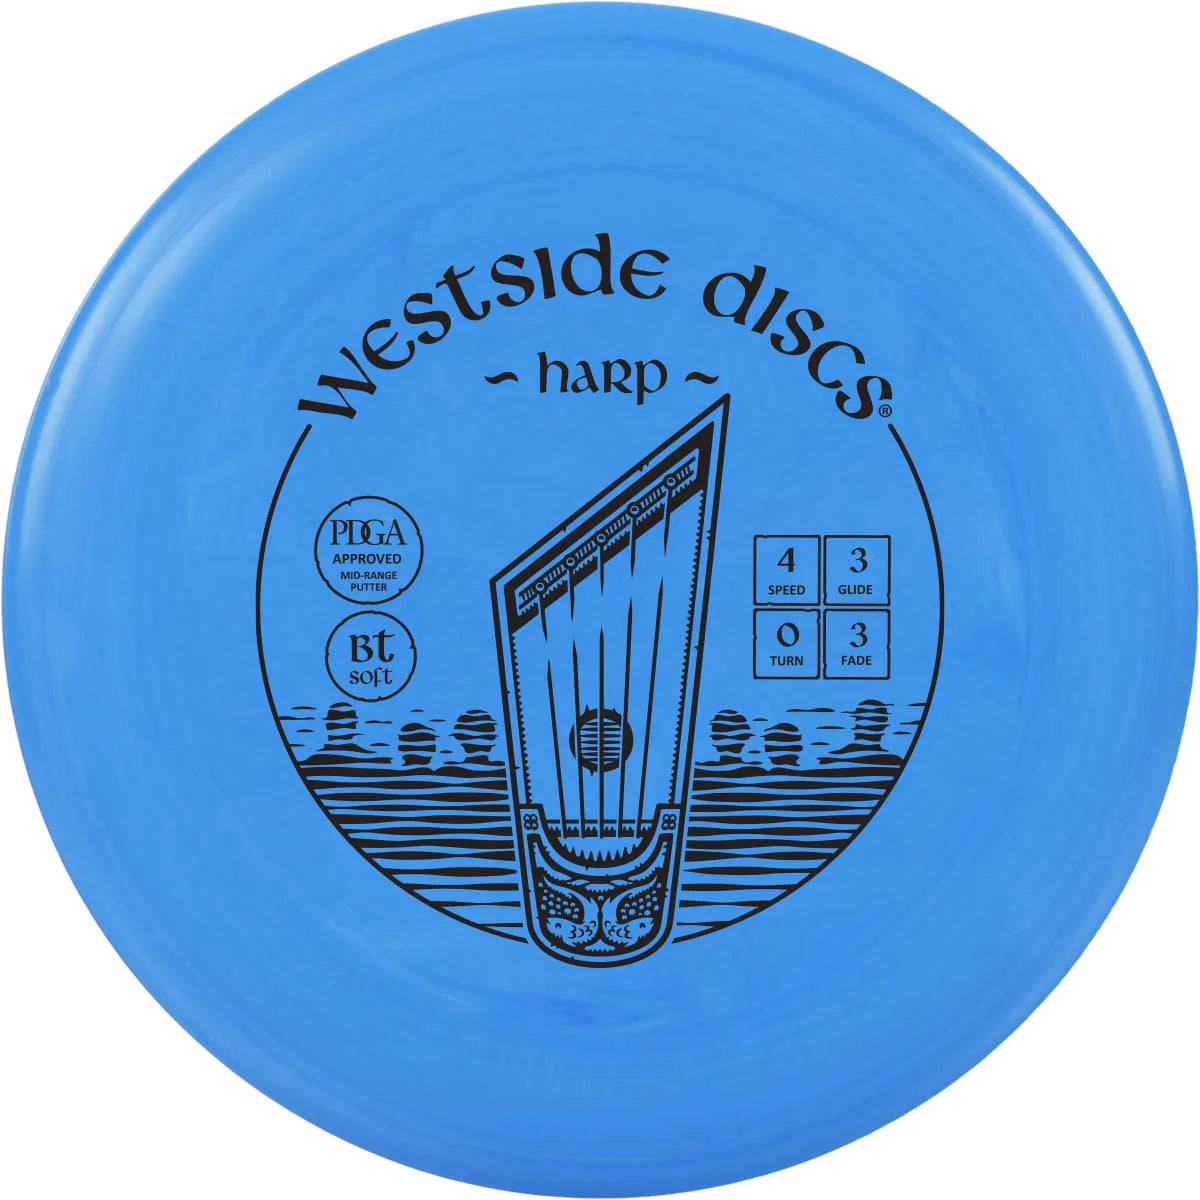 Westside Discs Bt Soft Harp-Sports Replay - Sports Excellence-Sports Replay - Sports Excellence